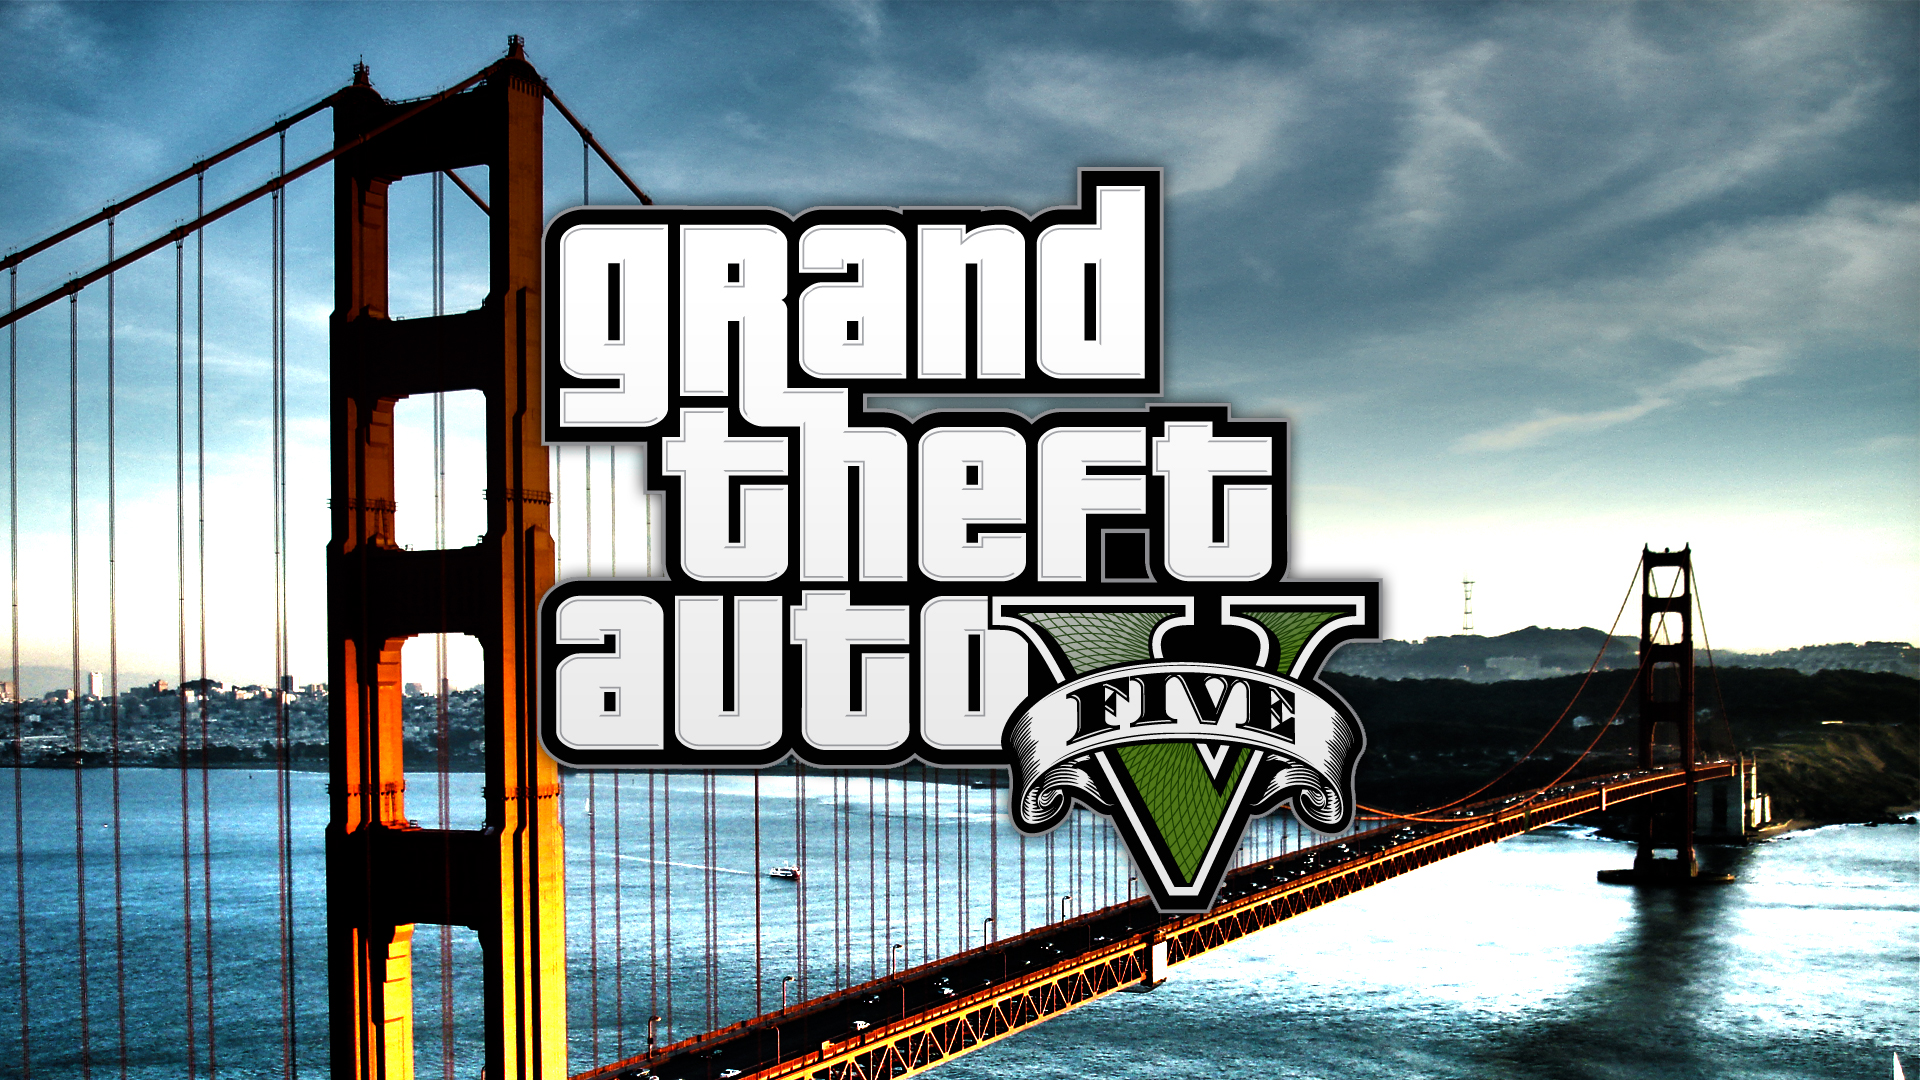 Wallpaper Gta 5 Grand Theft Auto V Rockstar 15 Free Wallpapers Free